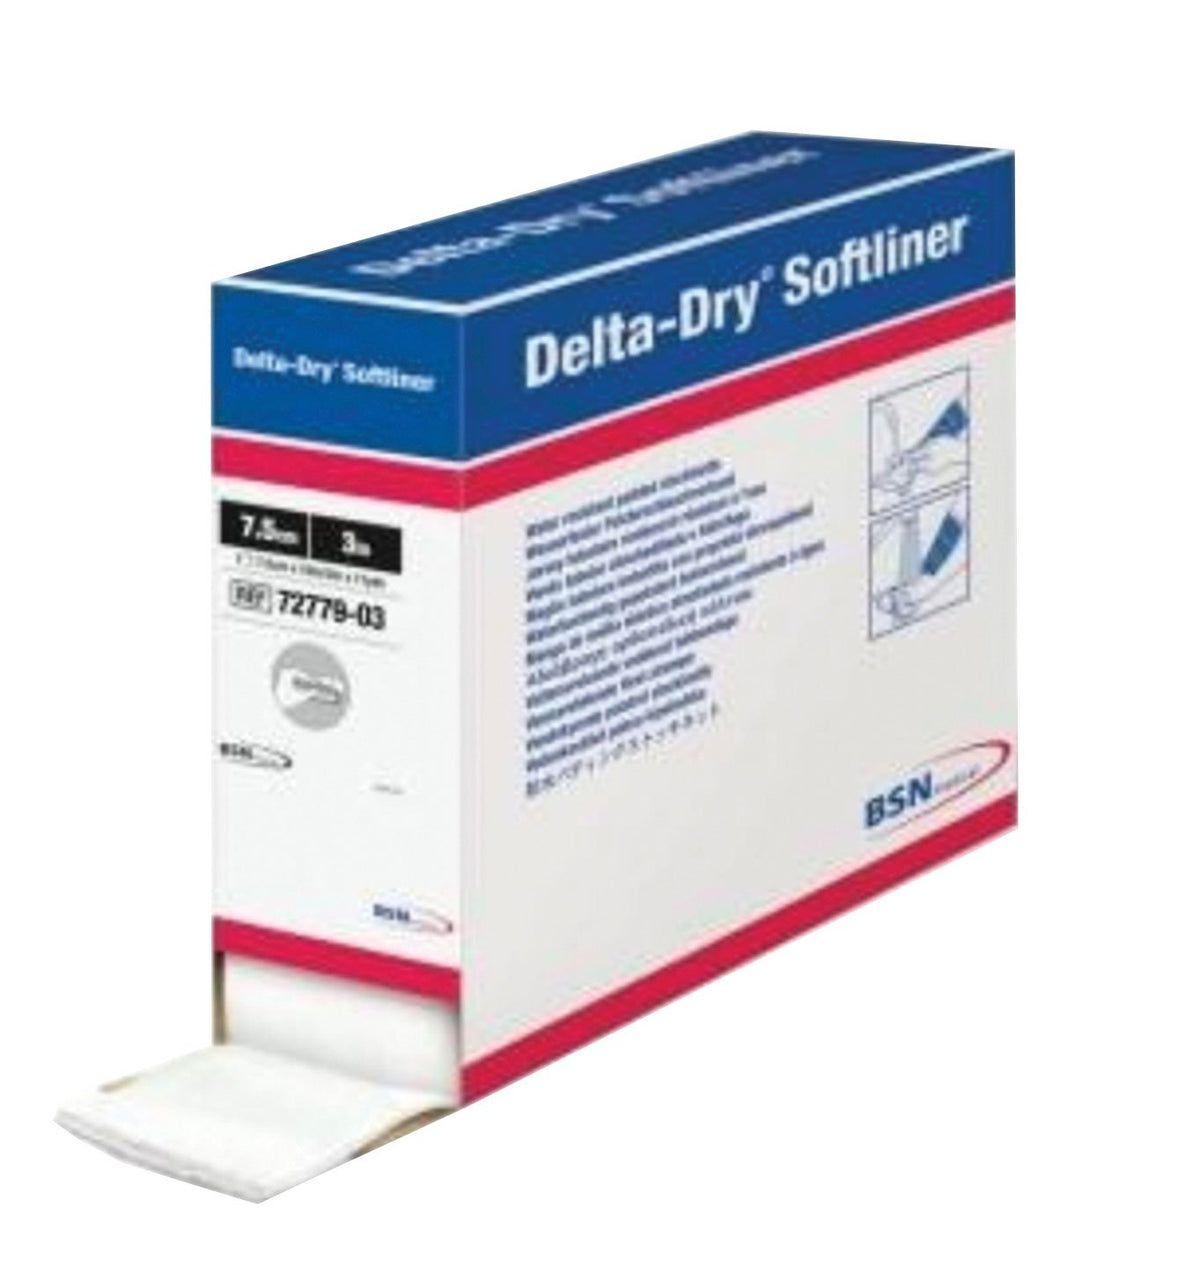 Delta-Dry Softliner